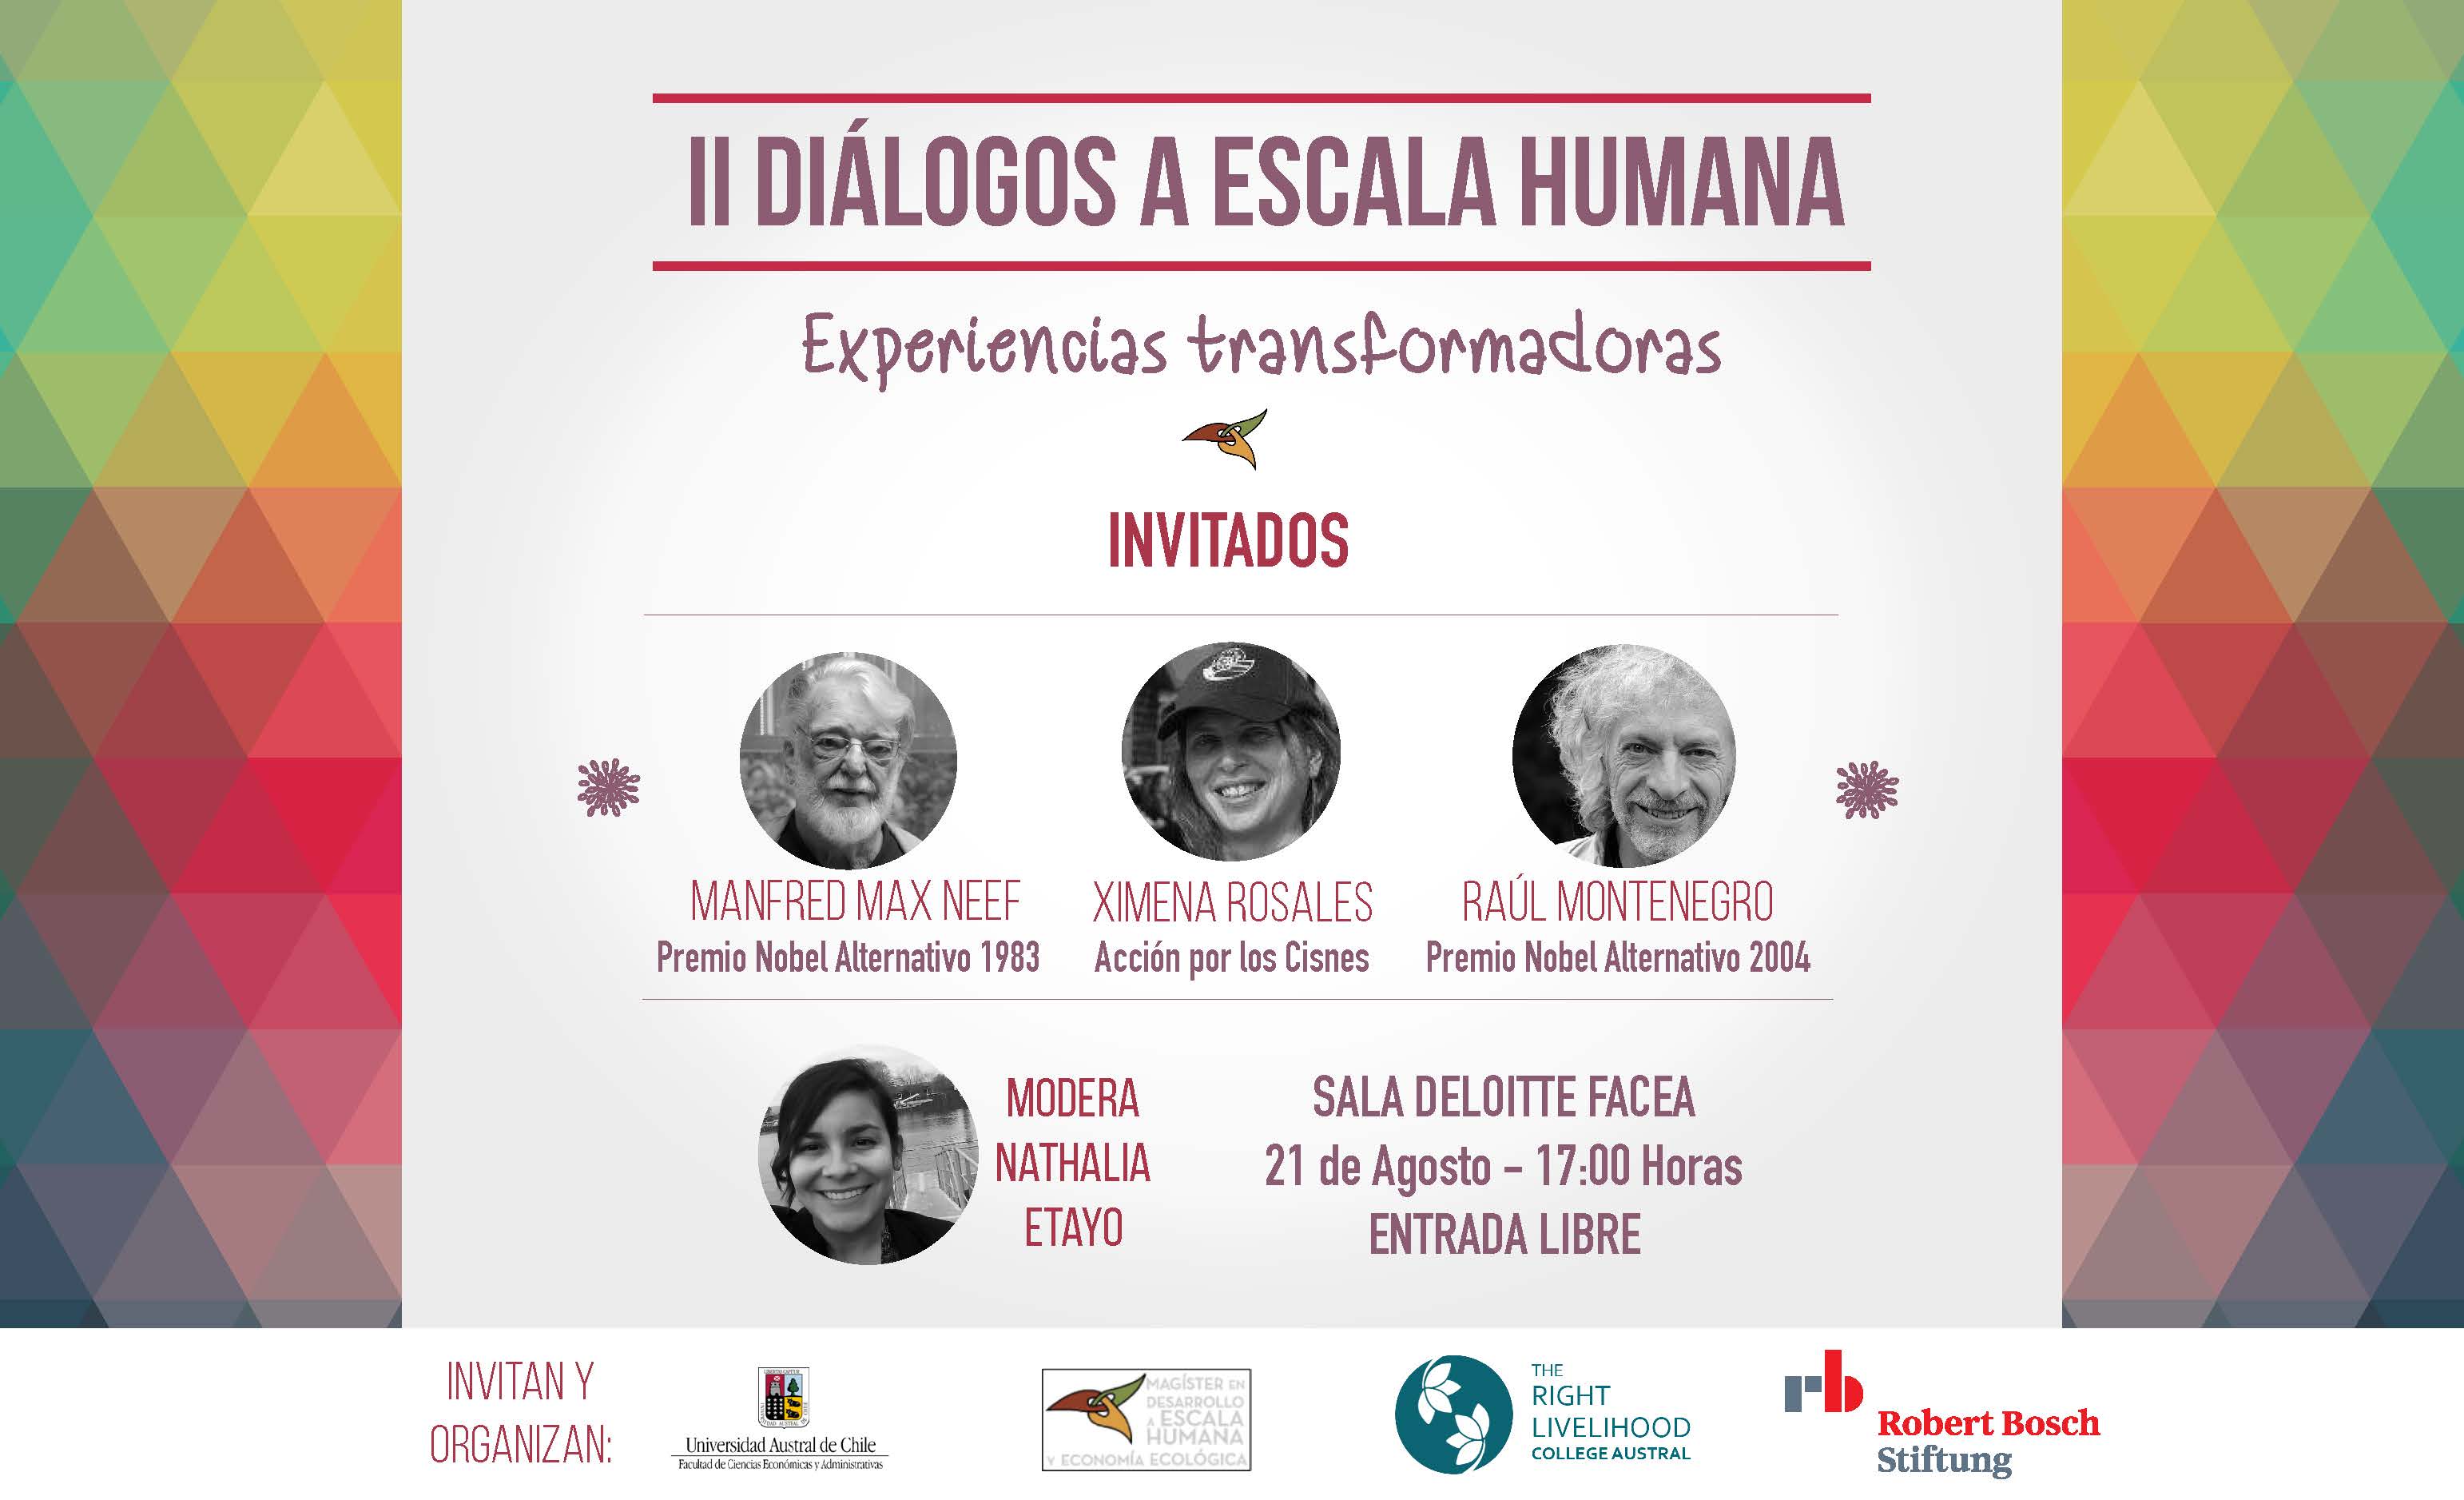 RLC Campus Valdivia organises Dialogues on Human Scale